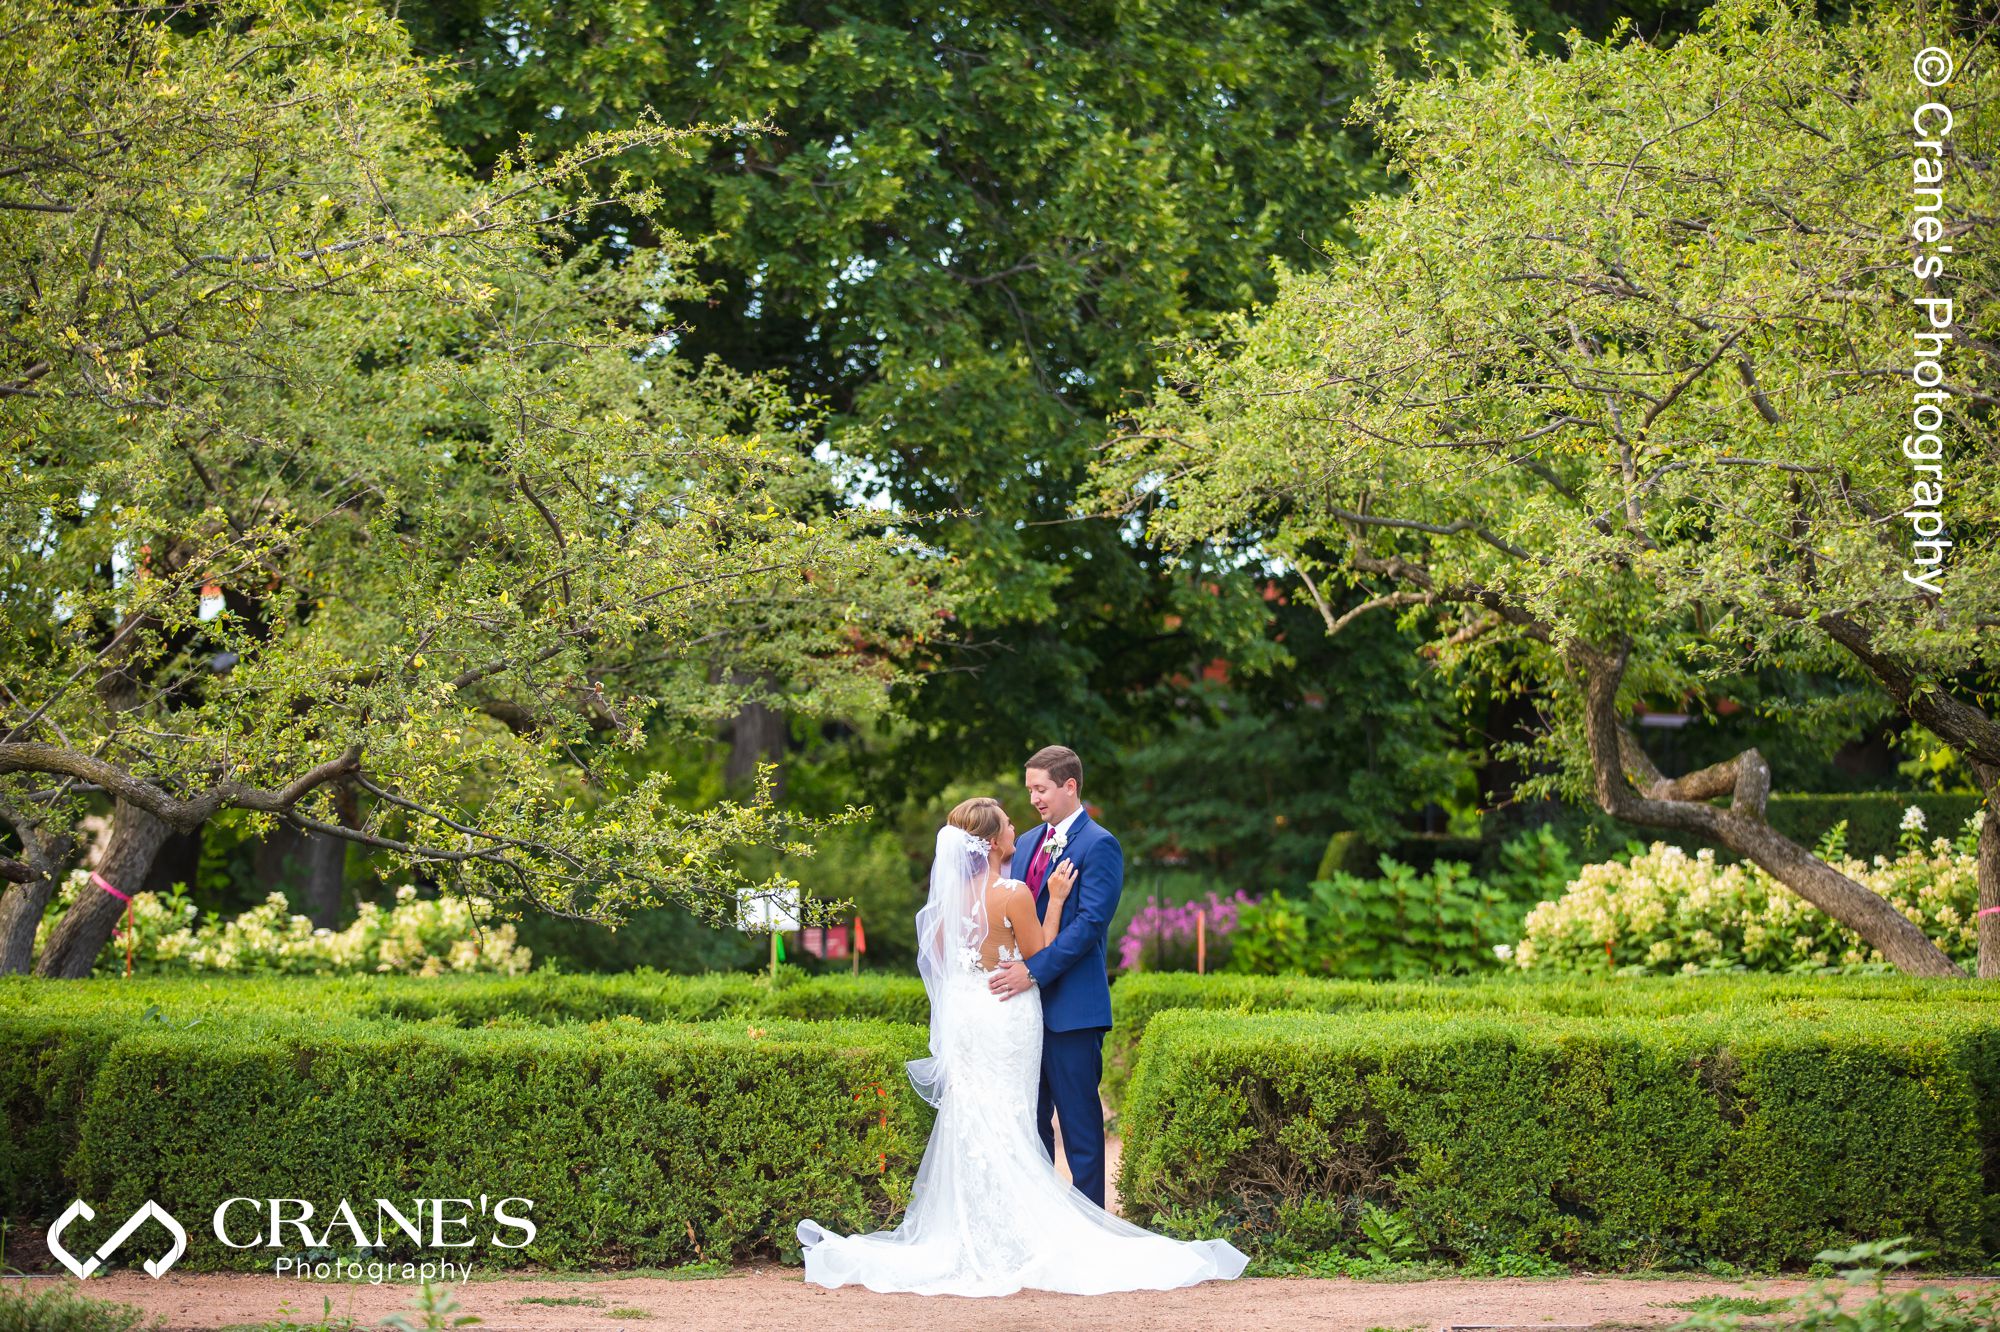 A summer bride and groom wedding portrait at the Morton Arboretum